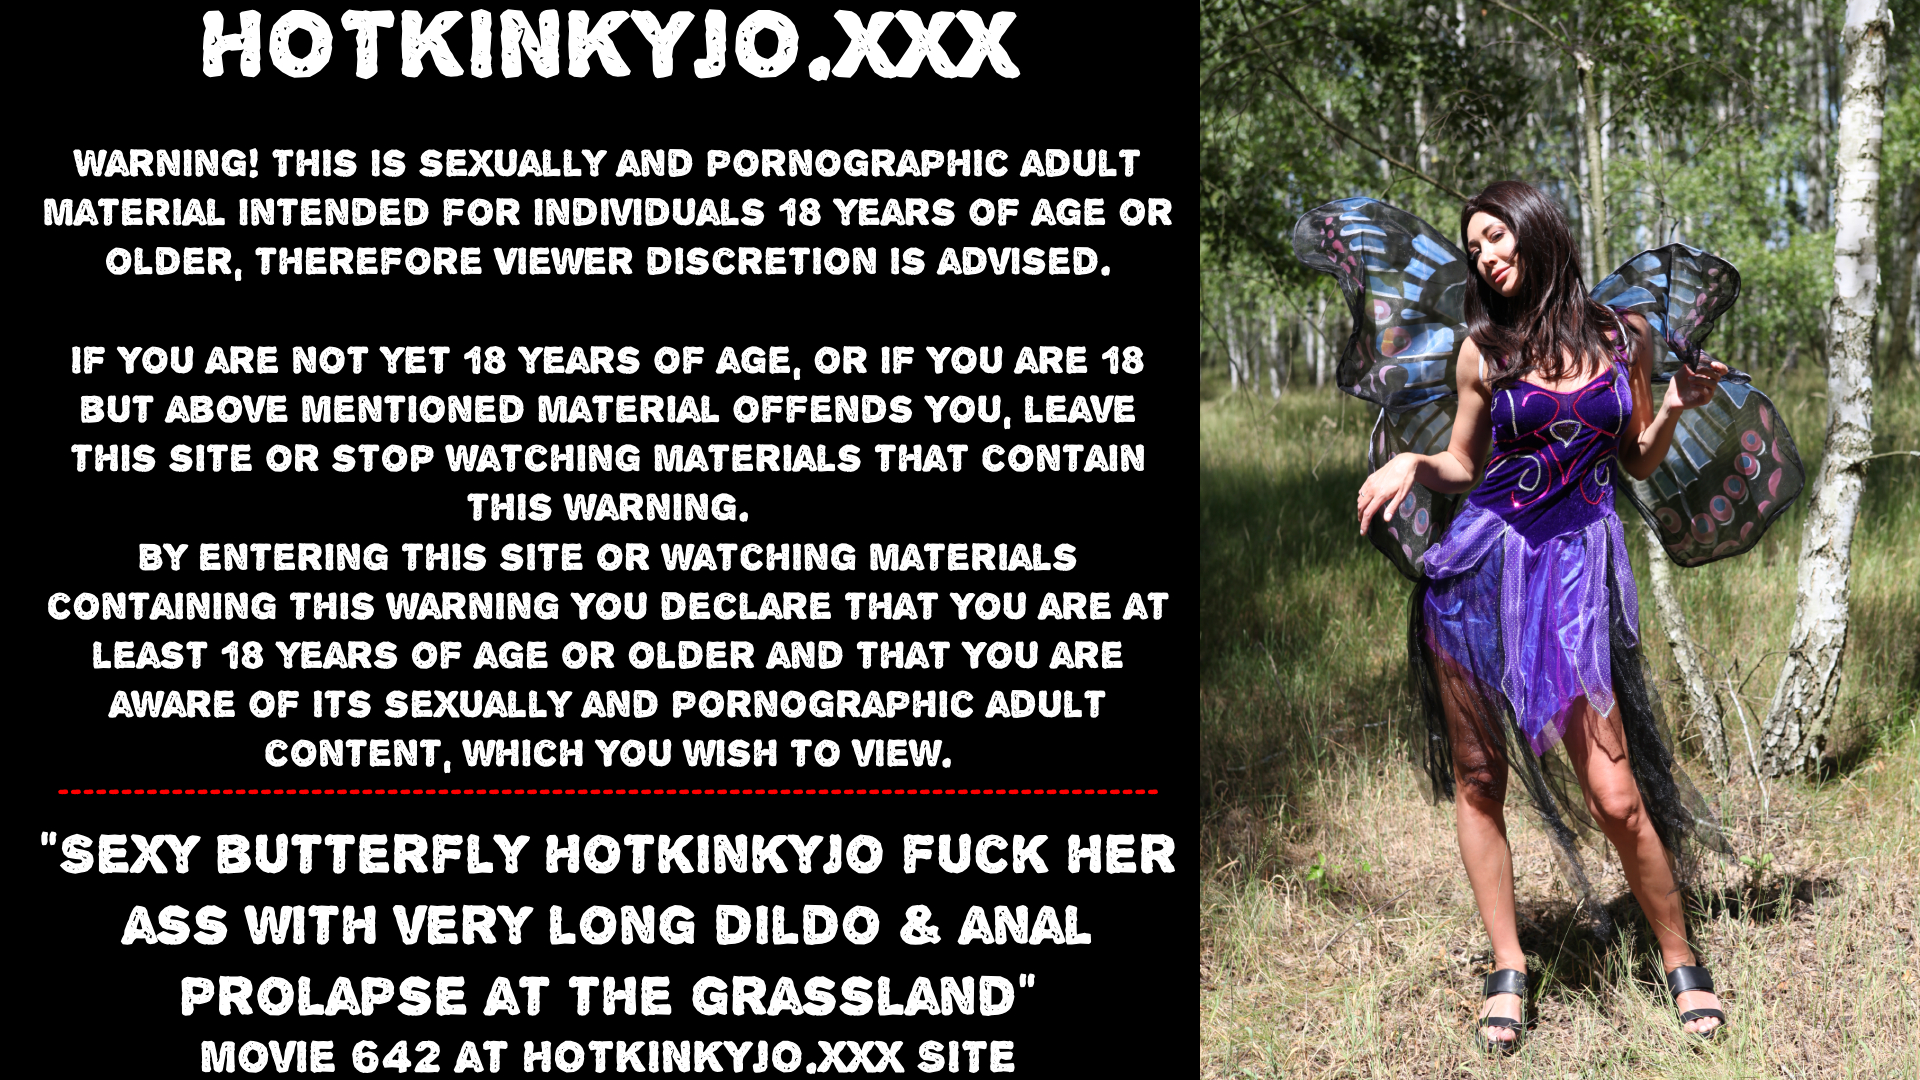 Hotkinkyjo very long dildo & anal prolapse at grassland